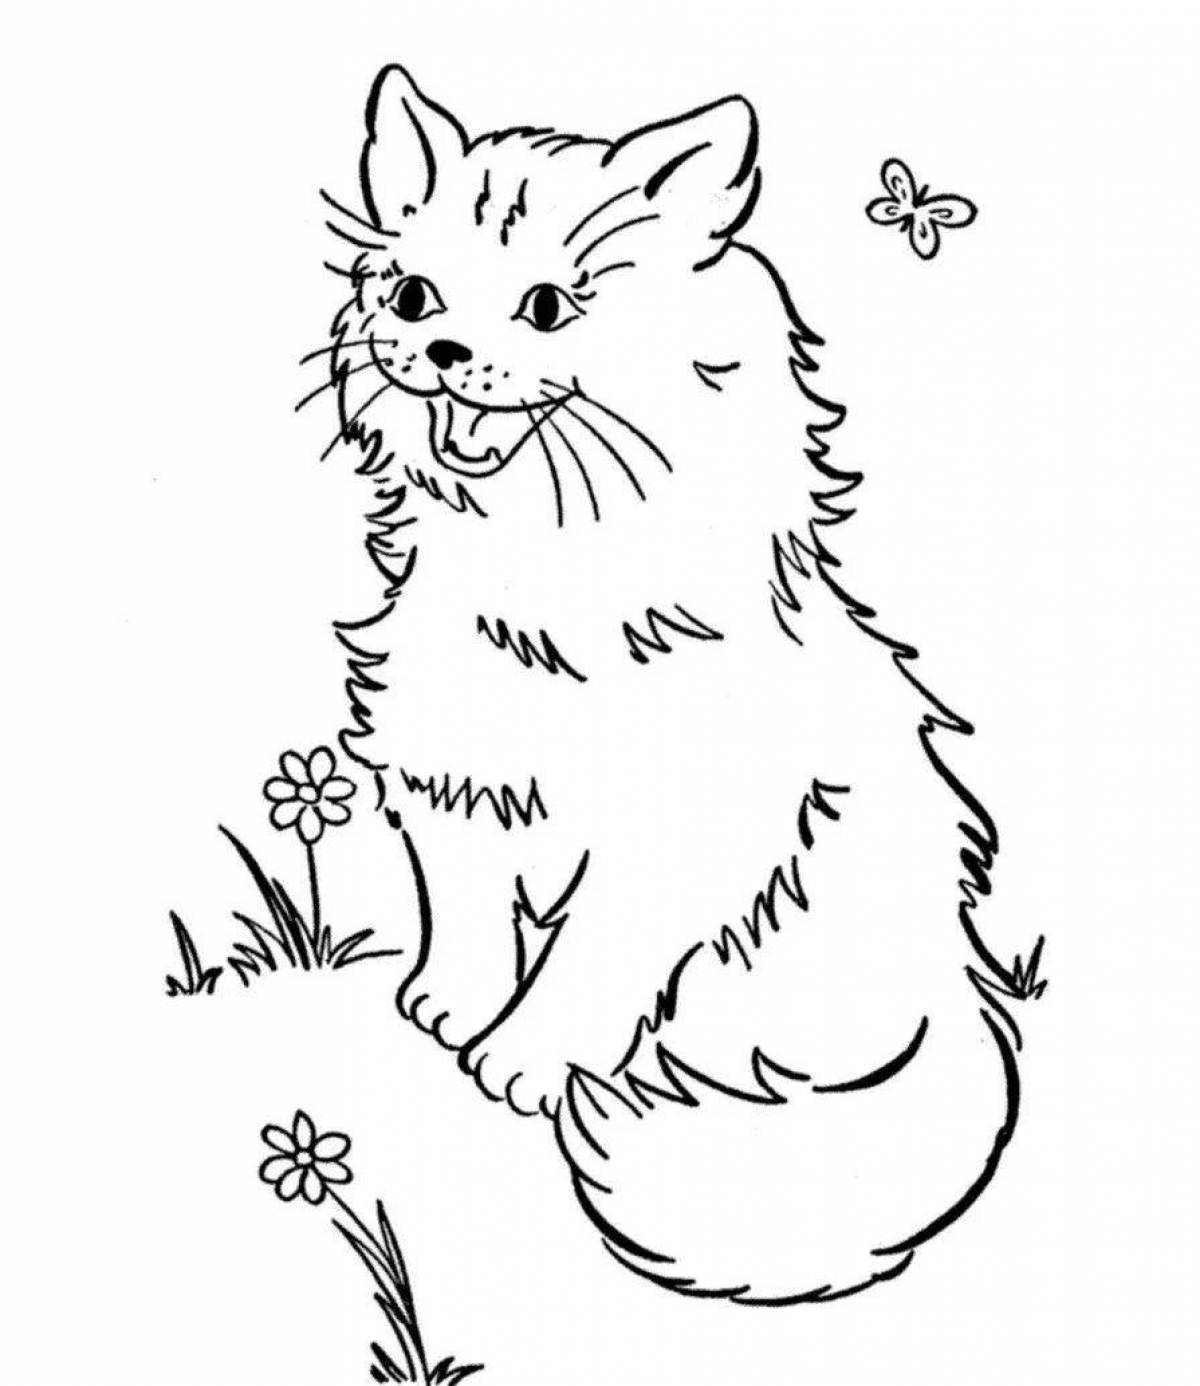 Coloring page cute siberian cat